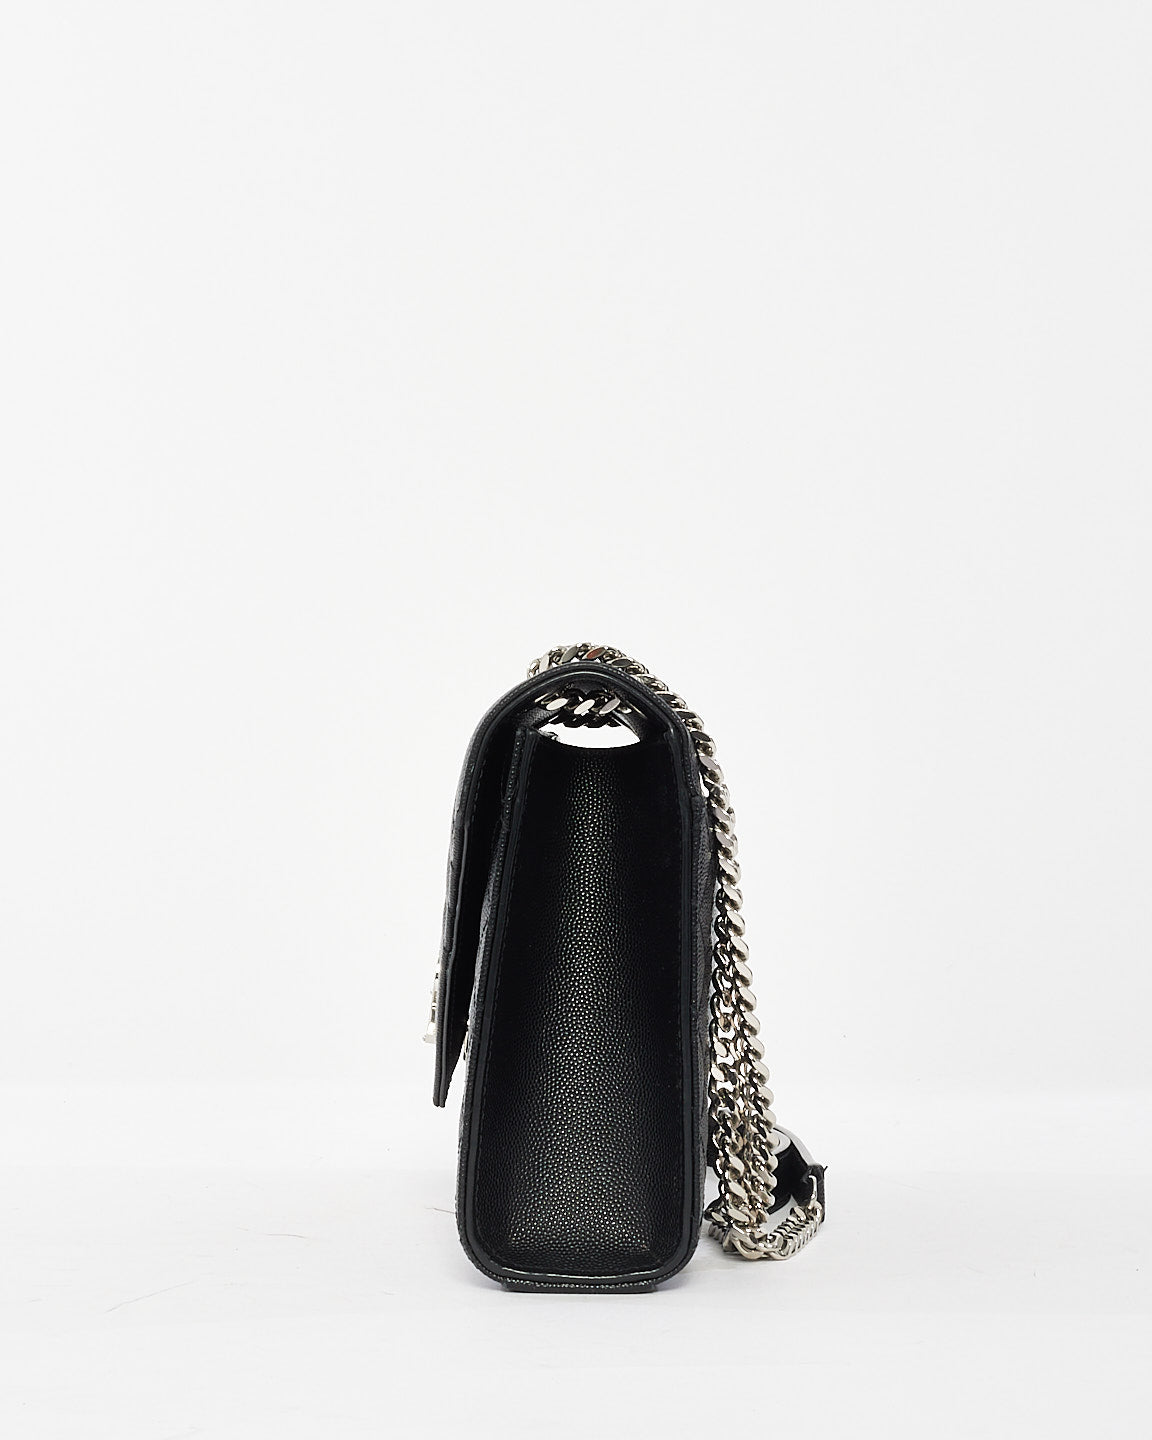 Saint Laurent Black Quilted Leather Medium Envelope Chain Bag